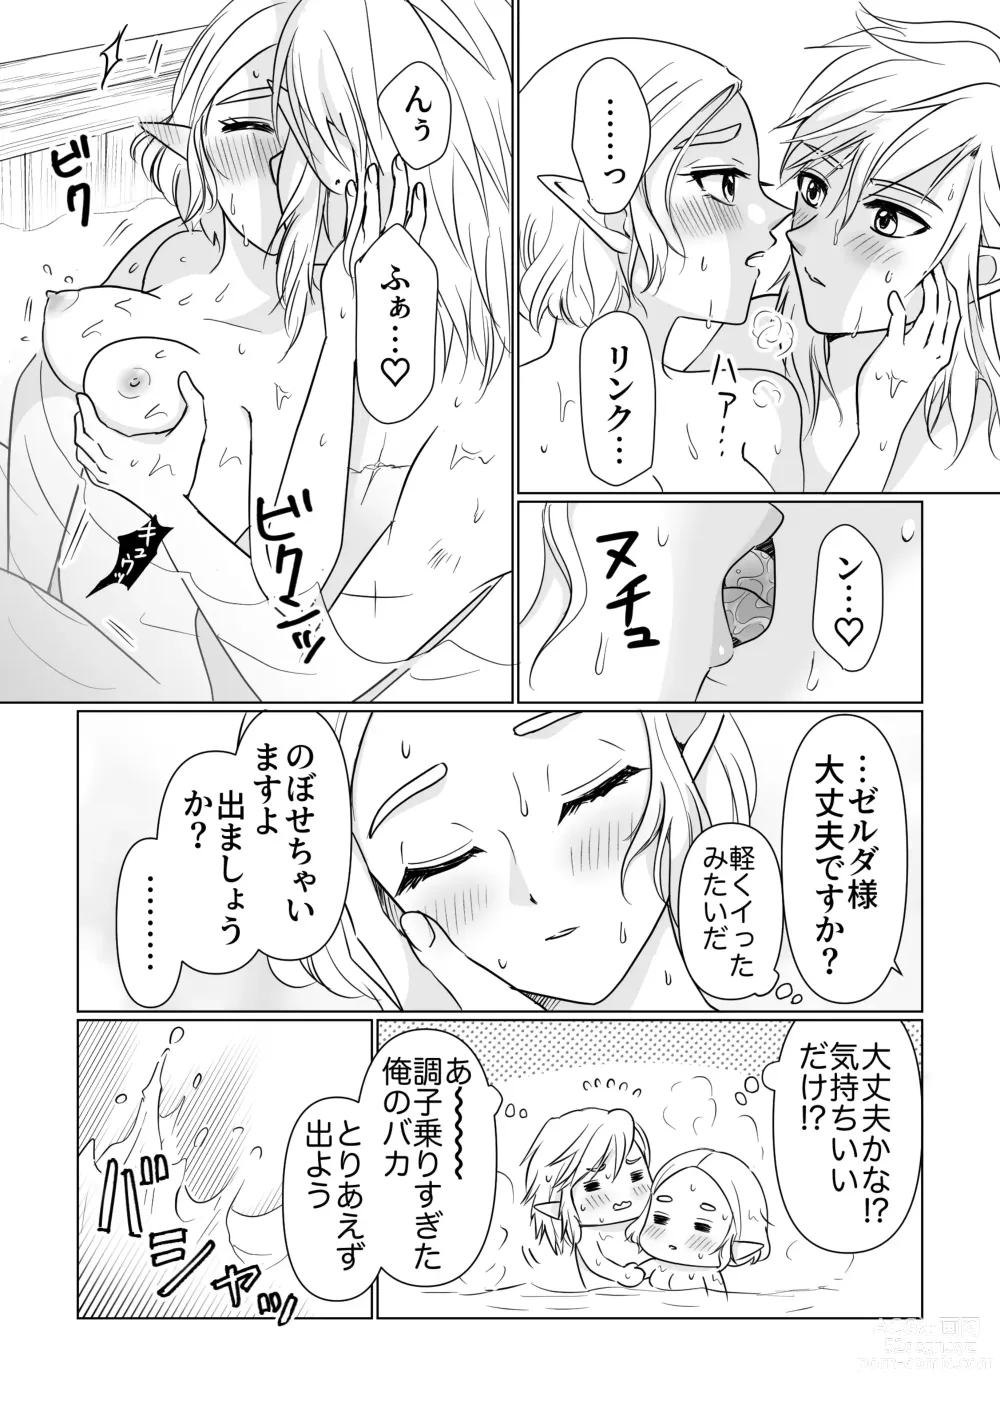 Page 5 of doujinshi Ofuro no Jikan